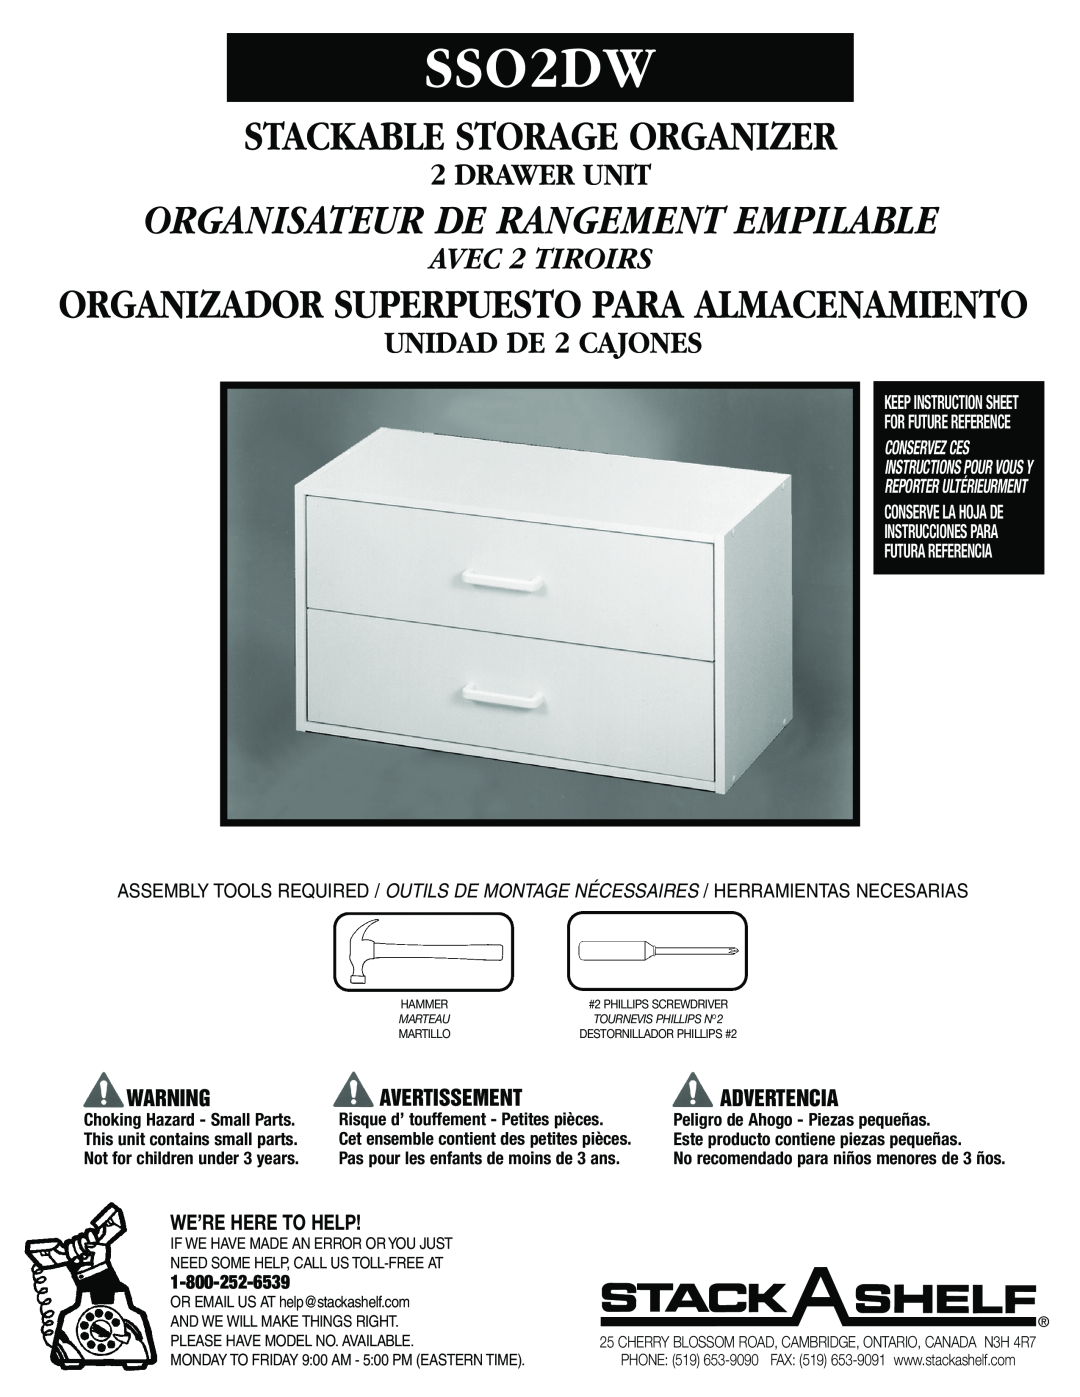 Closet Maid SSO2DW instruction sheet Stackable Storage Organizer, Organisateur De Rangement Empilable, Drawer Unit, Hammer 